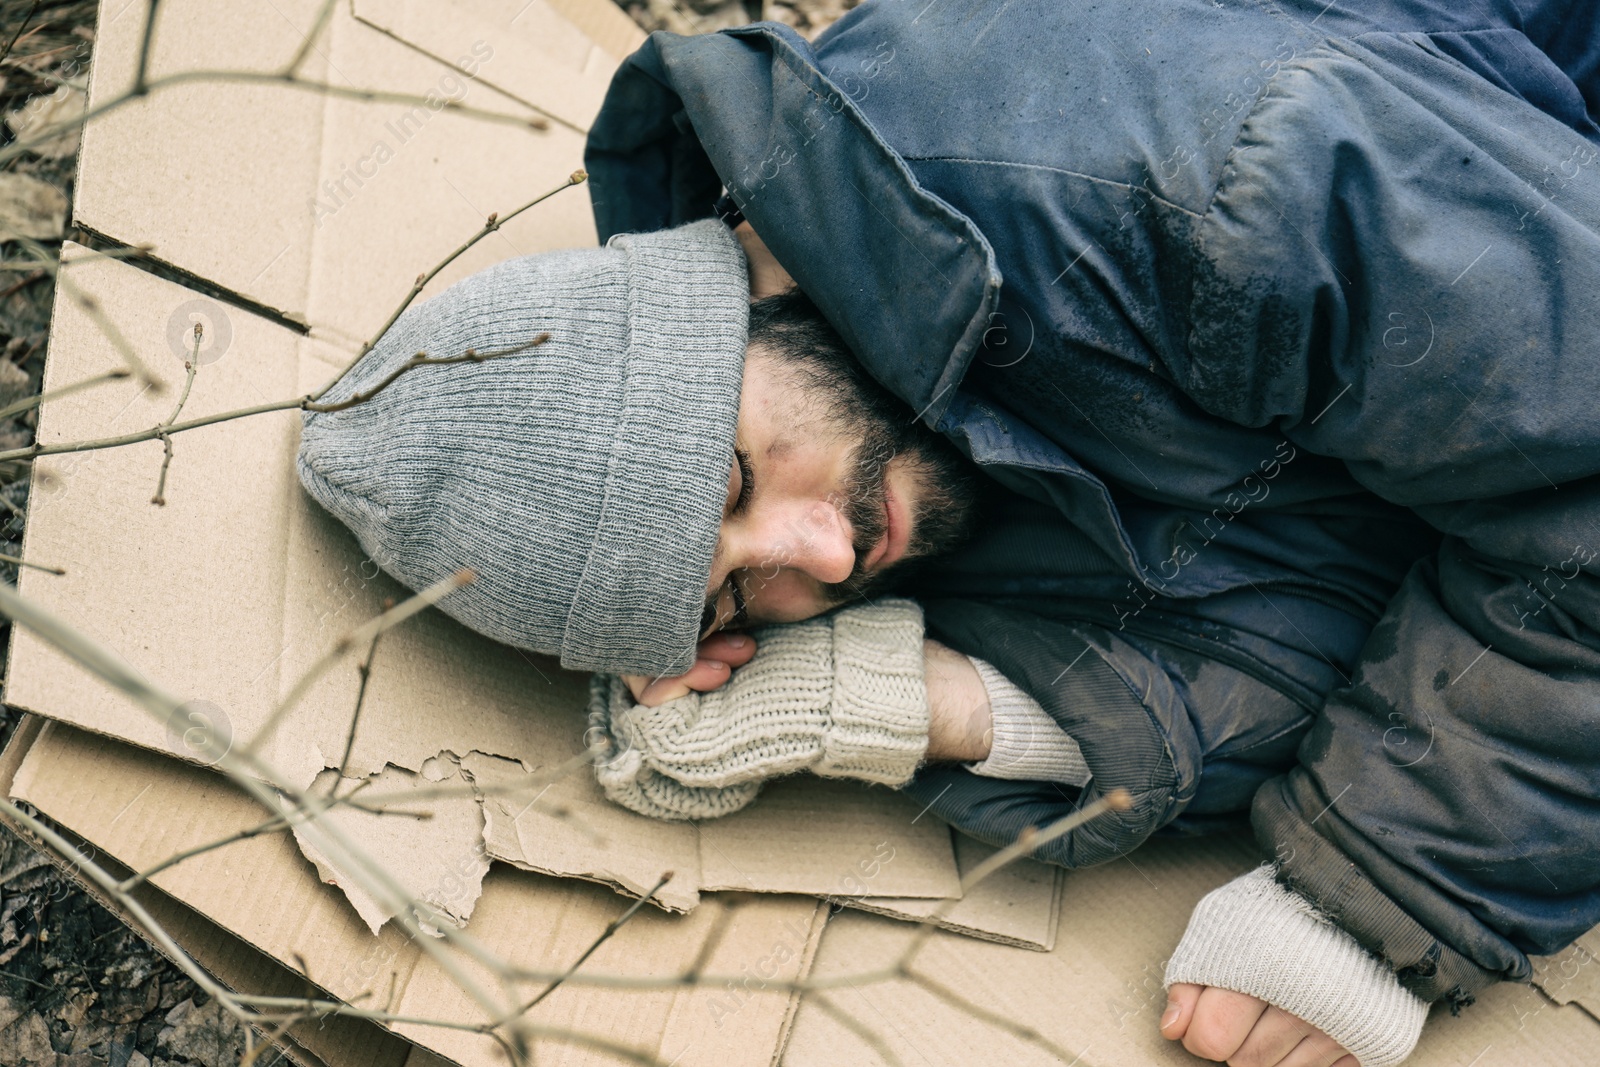 Photo of Poor homeless man lying on cardboard outdoors